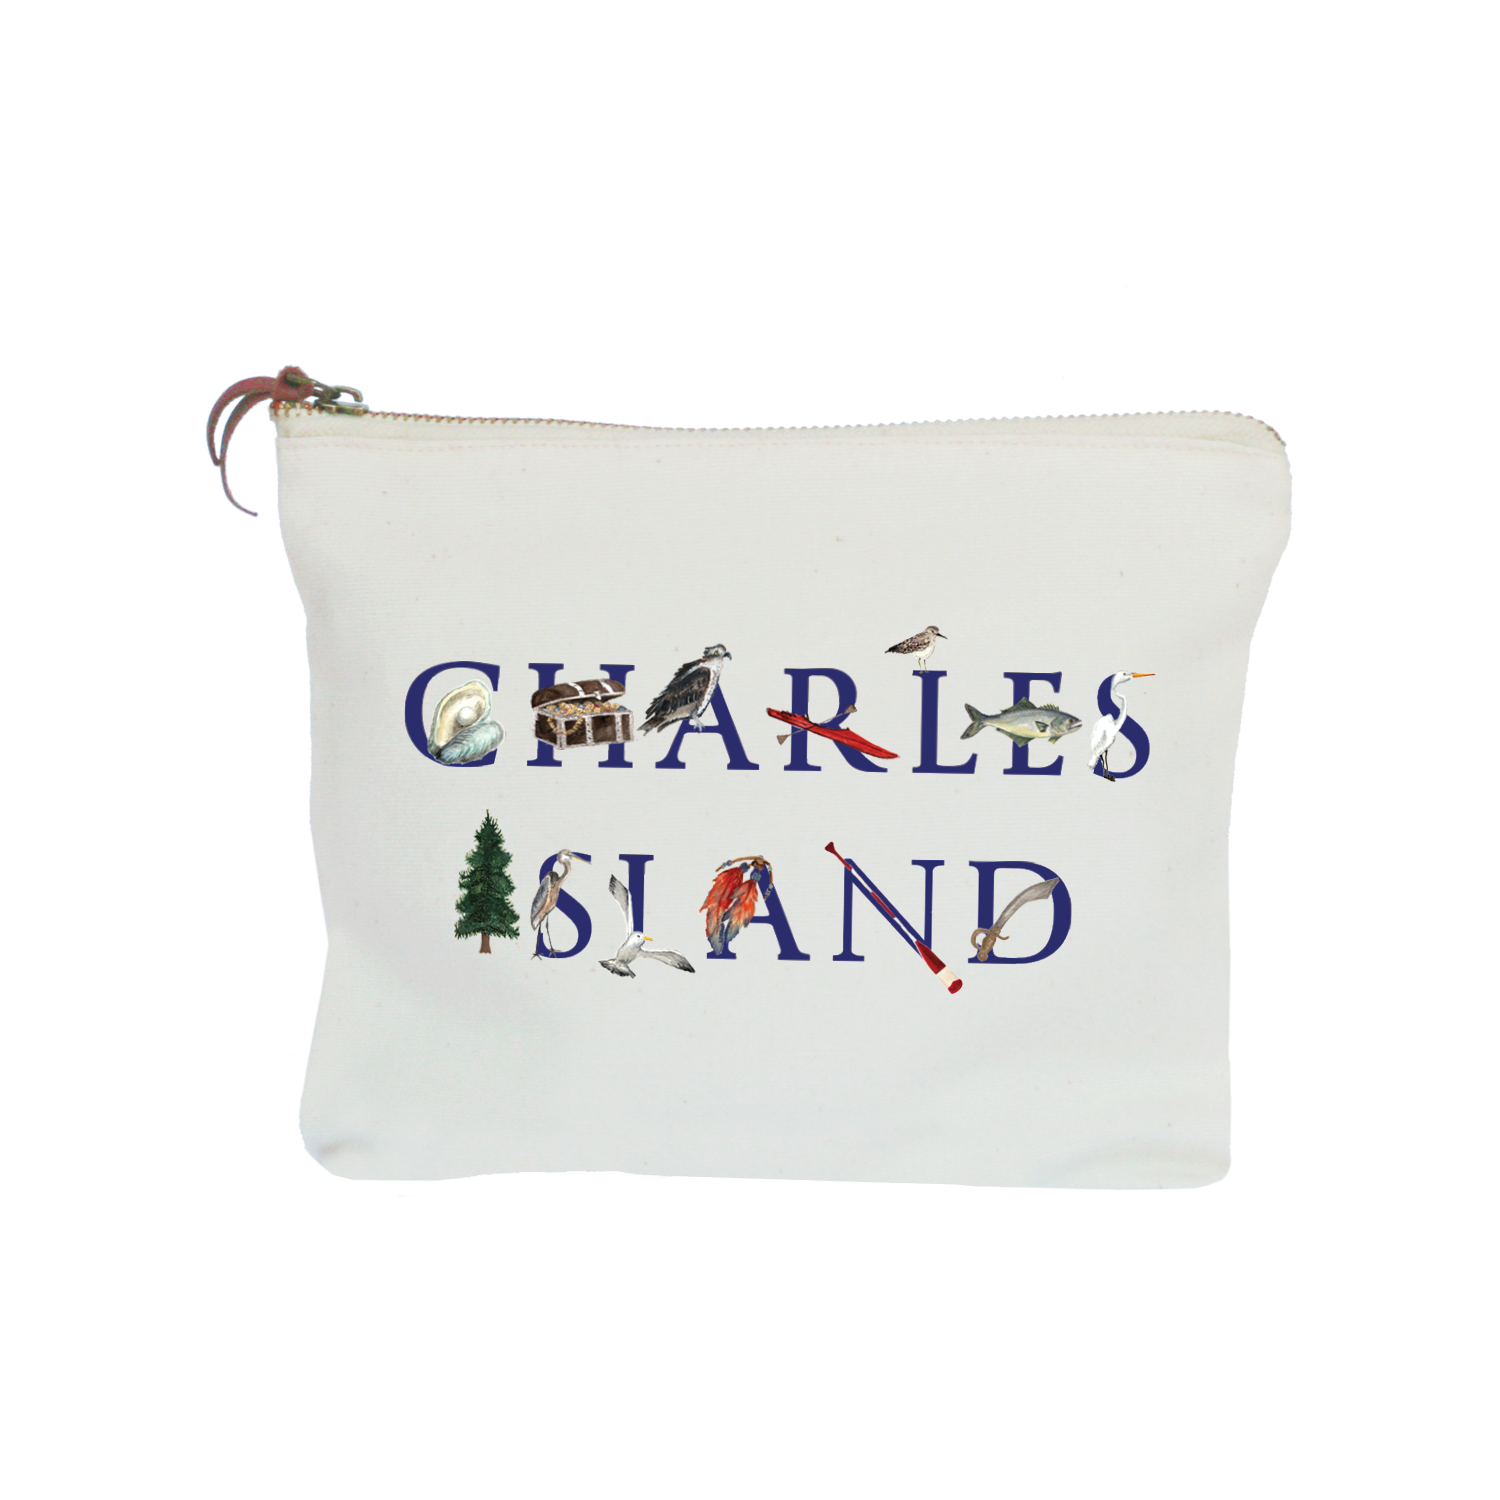 charles island zipper pouch